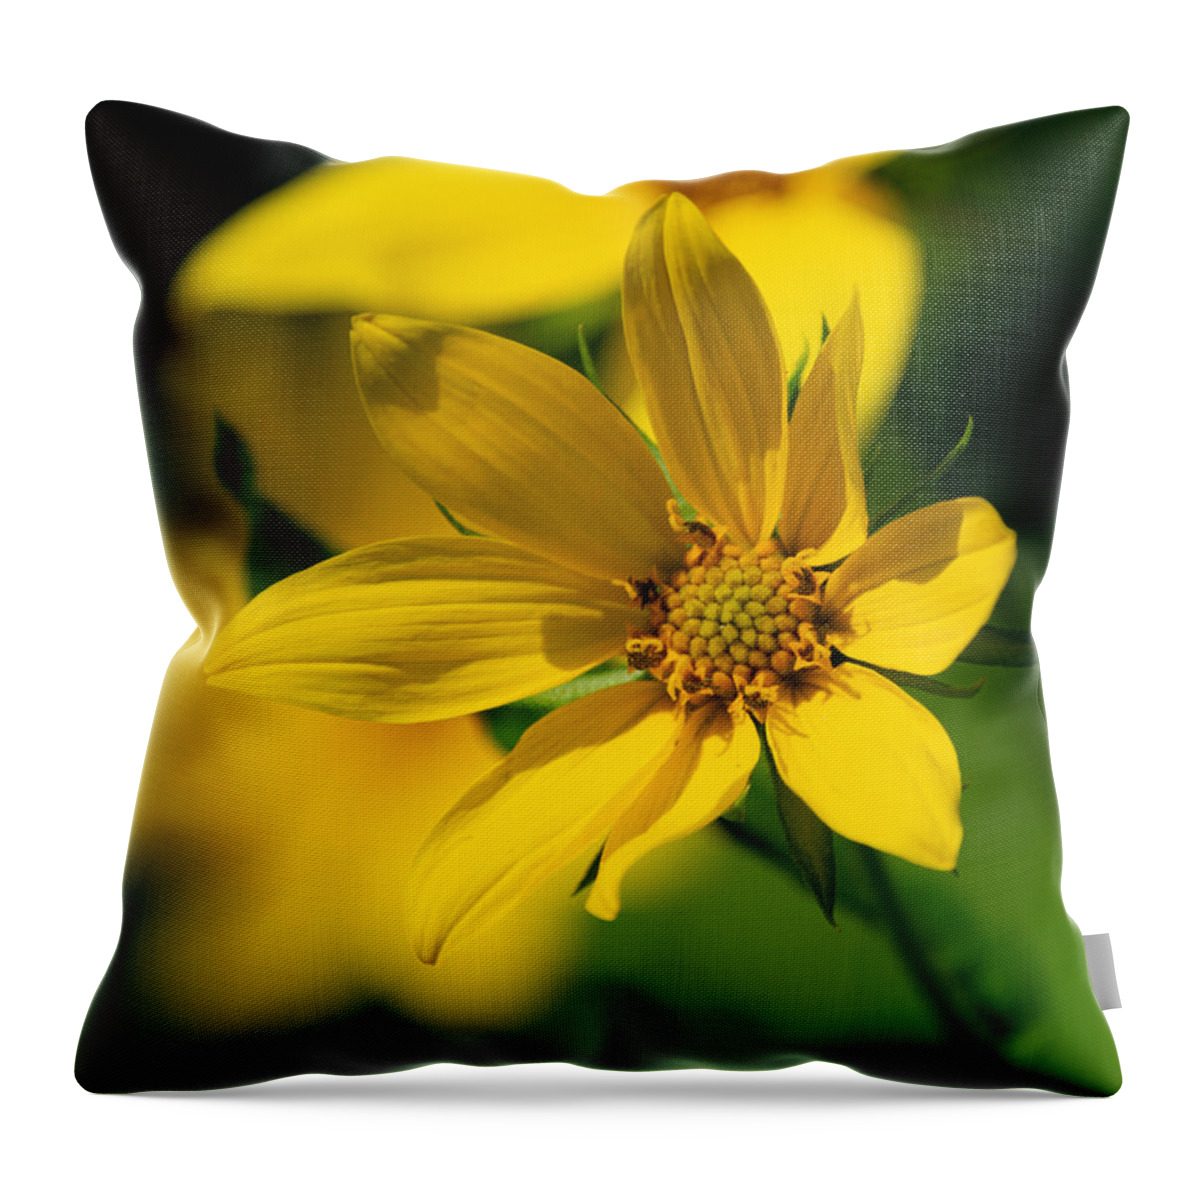 Sunflower Throw Pillow featuring the photograph Packing Sunflower by Linda Bonaccorsi